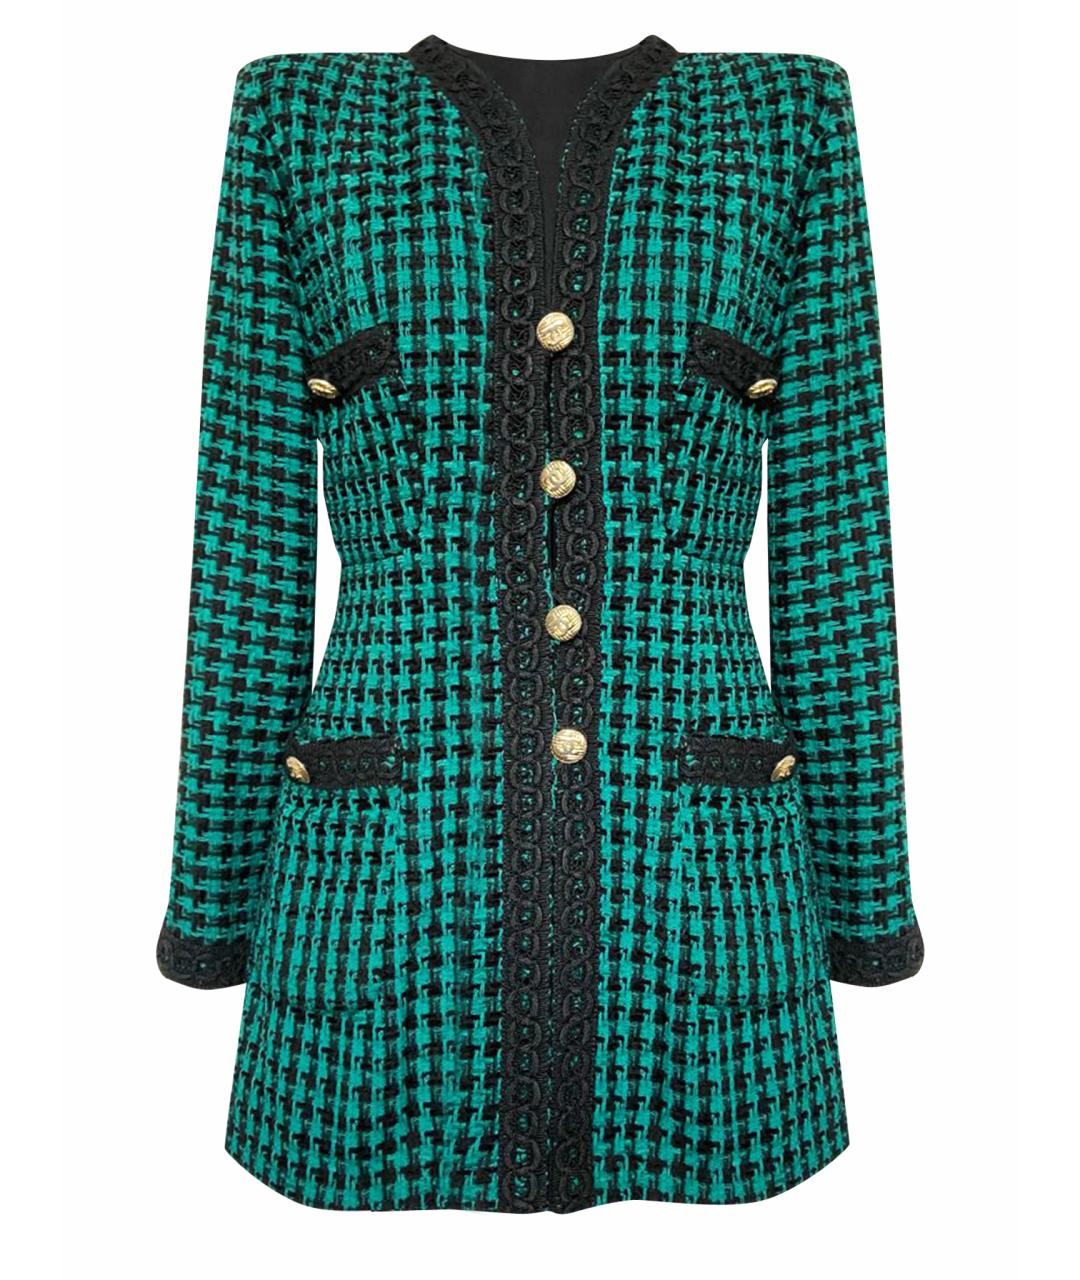 CHANEL PRE-OWNED Зеленый твидовый жакет/пиджак, фото 1